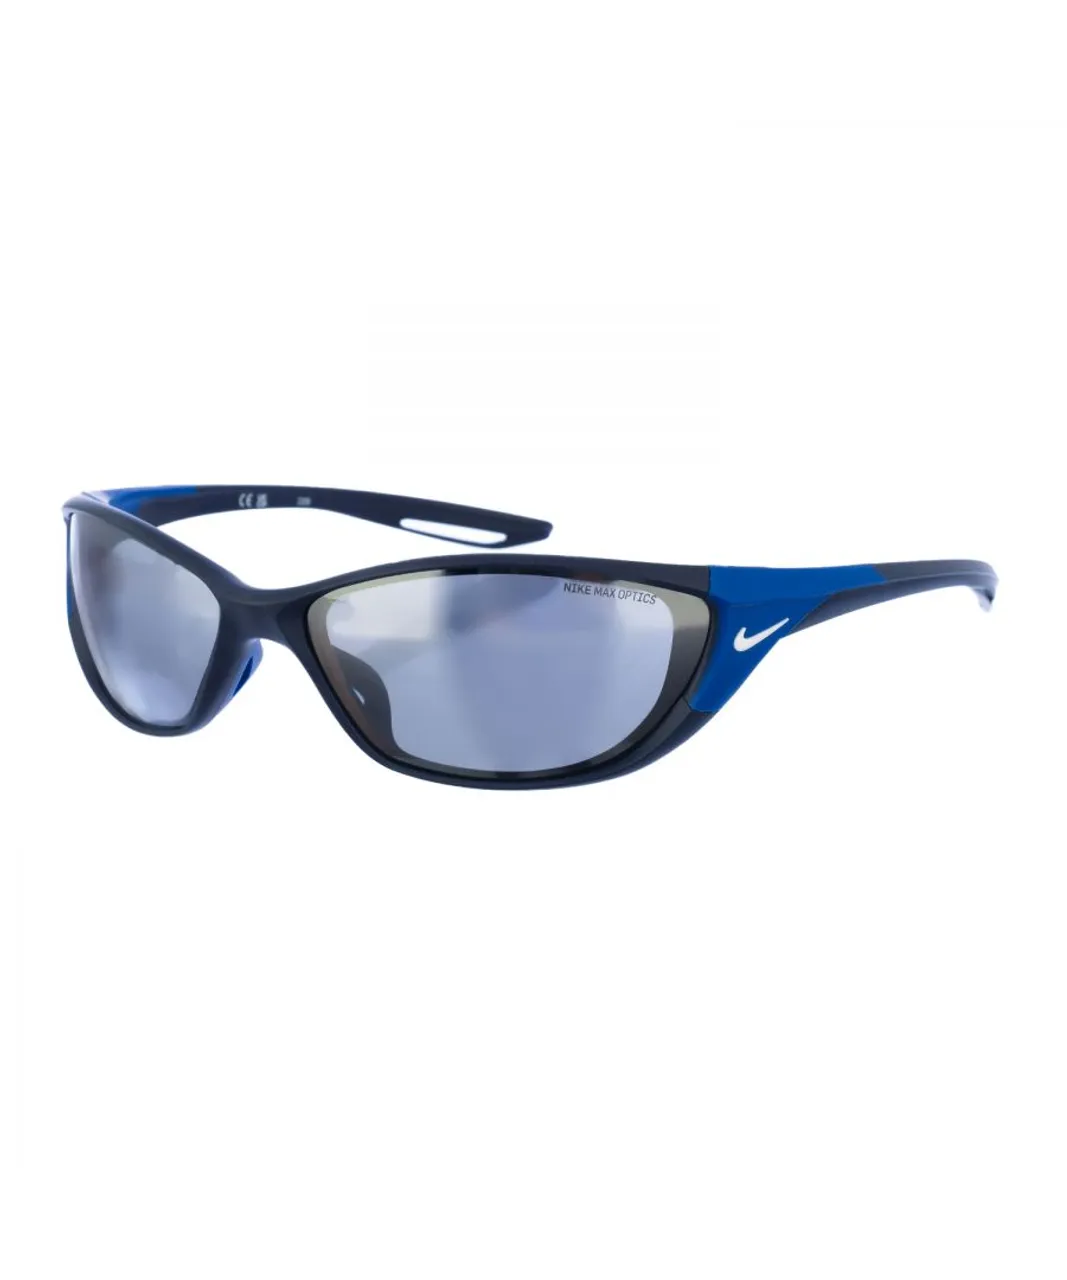 Nike Mens Oval shaped acetate sunglasses DZ7356 men - Blue - One